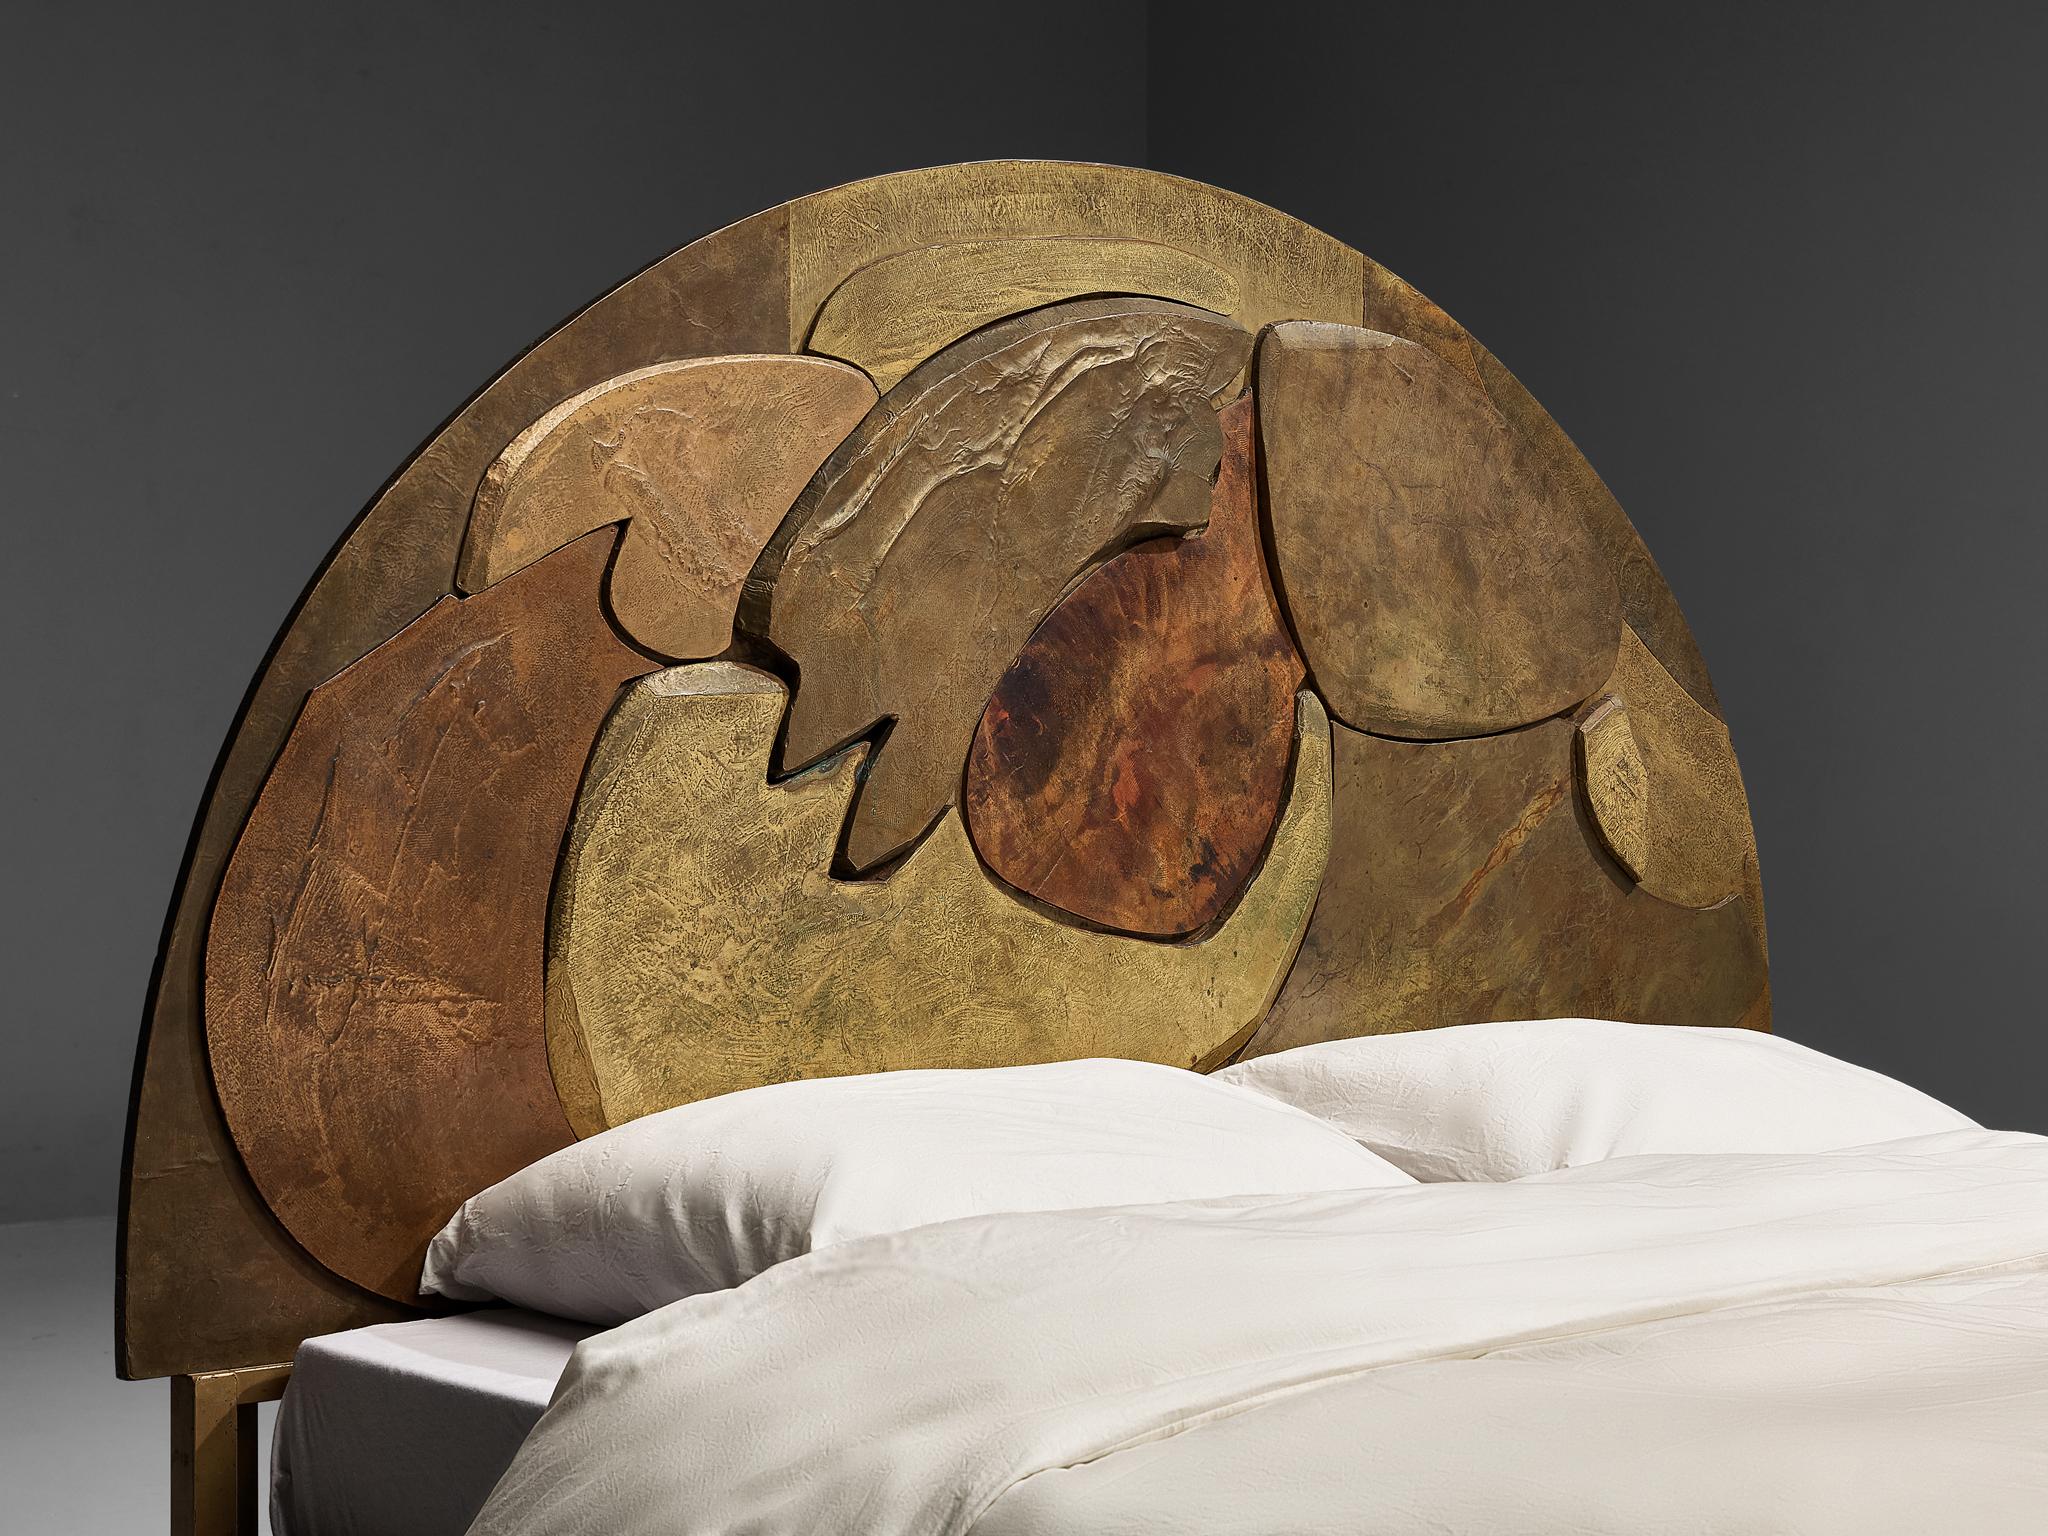 Italian Unique Sculptural Lorenzo Burchiellaro Handcrafted Headboard in Wood and Metal